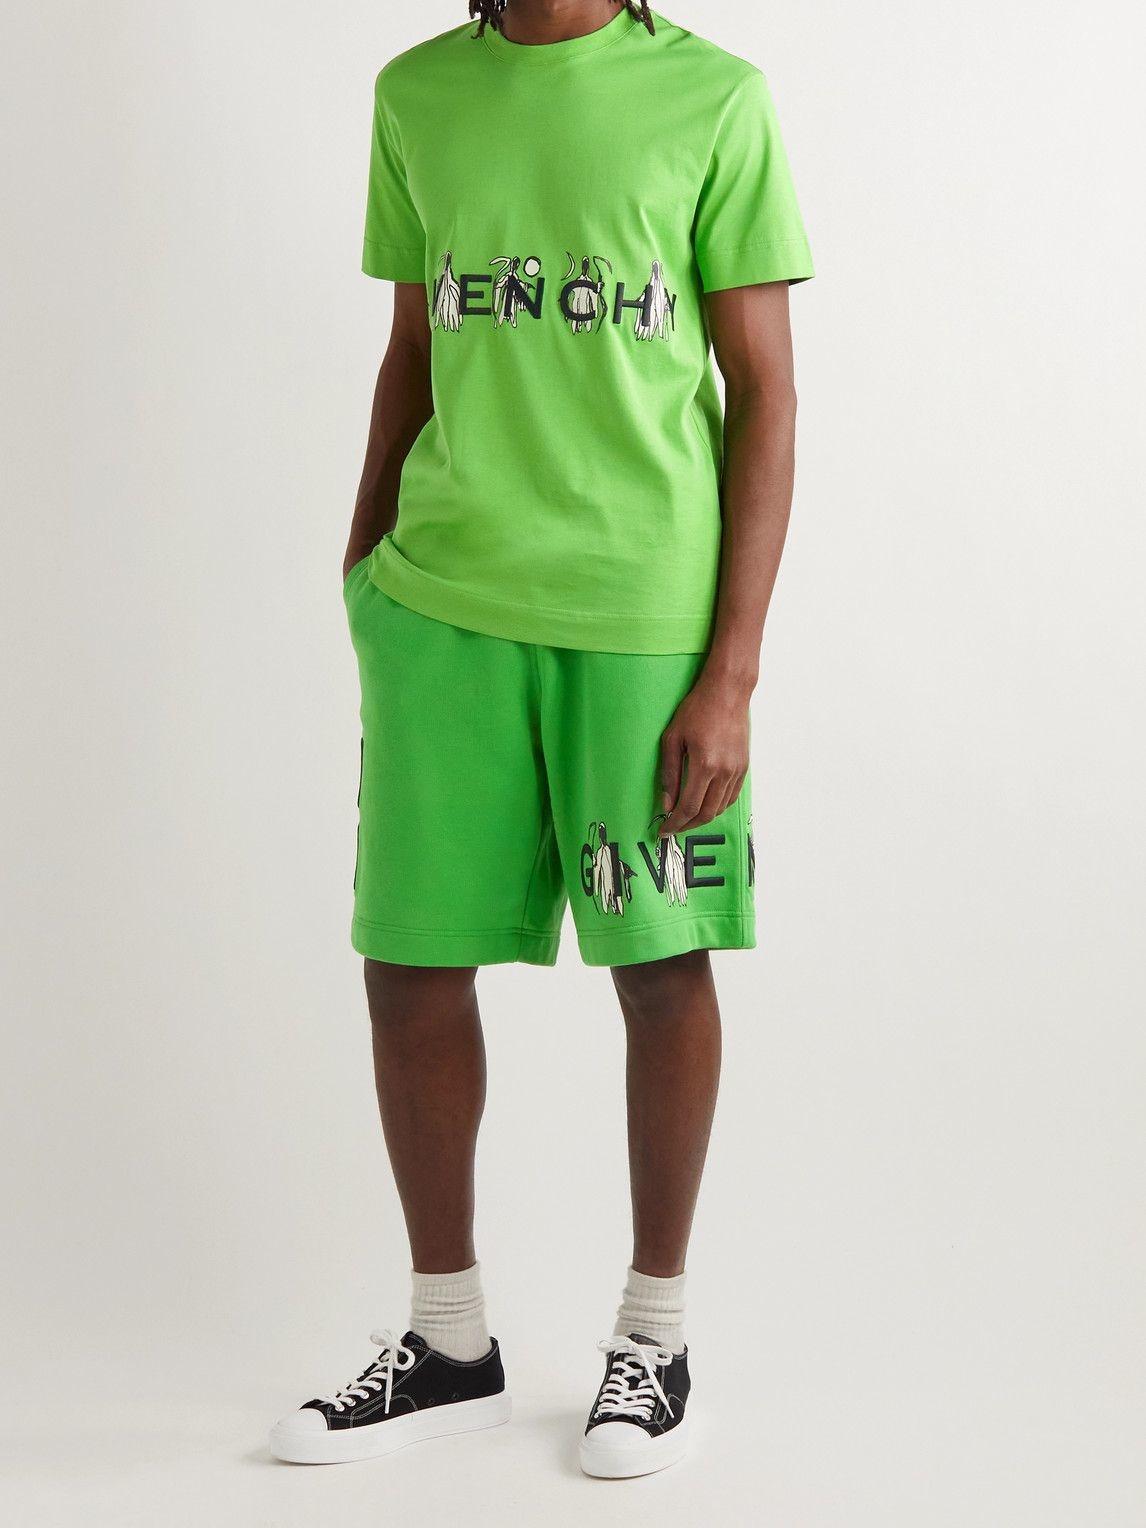 Givenchy Josh Smith Bag Art Print Crewneck T-shirt in Green for Men